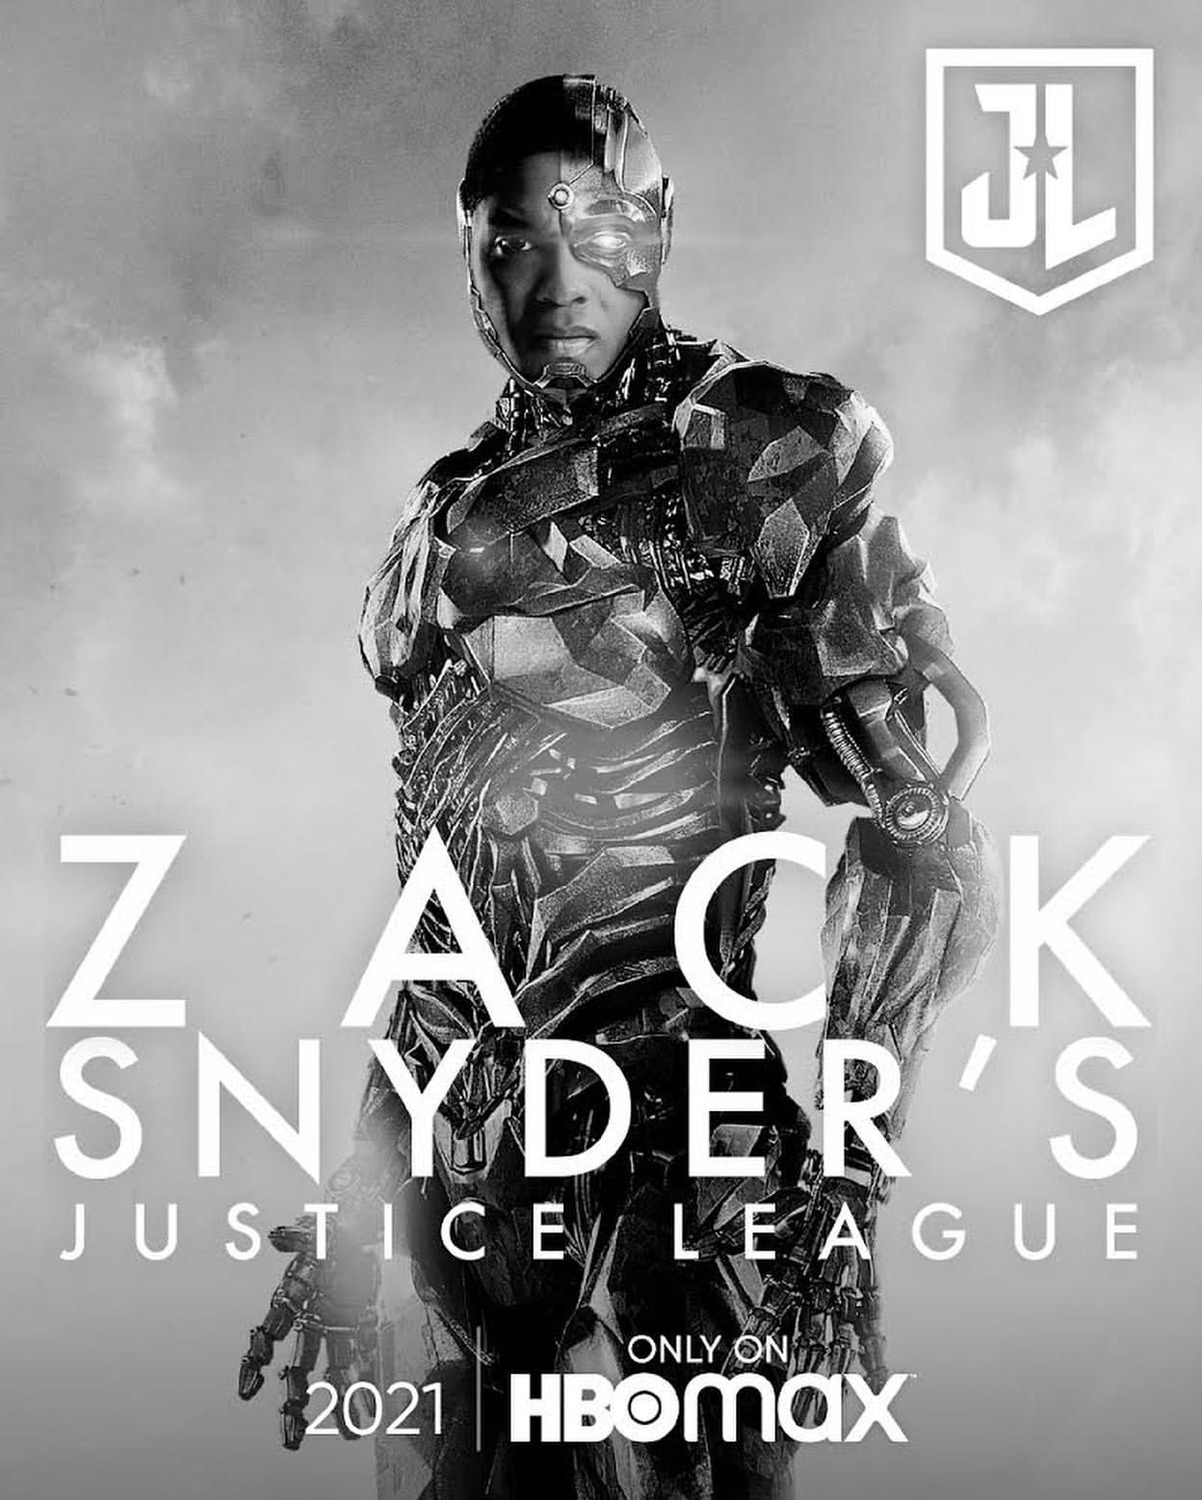 szmk_hbo_justice_league_snydercut_zack_snyder_batman_dc_comics_superman_aquaman_wonder_woman_cyborg_darkseid_8.jpg